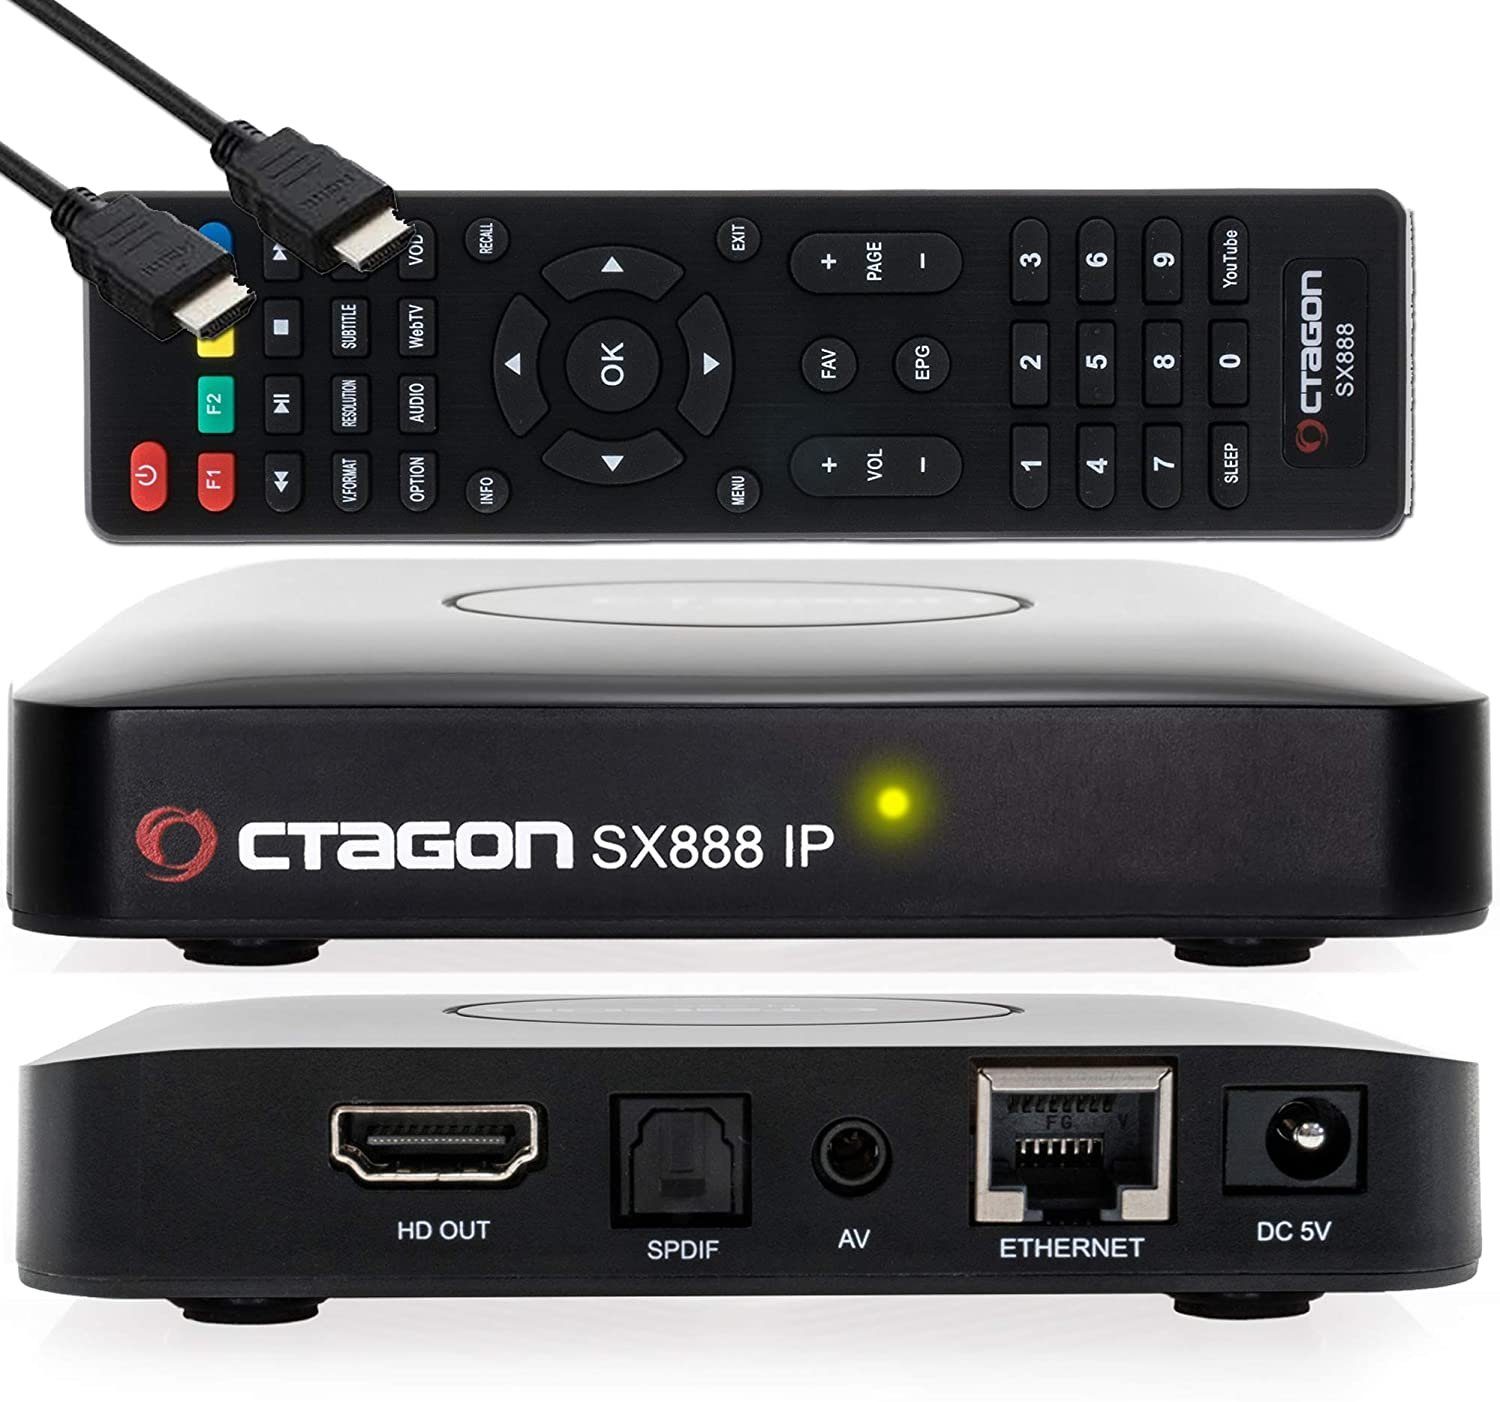 Box IP Xtream HEVC Set-Top OCTAGON OCTAGON SX888 M3U IPTV H.265 Stalker Streaming-Box